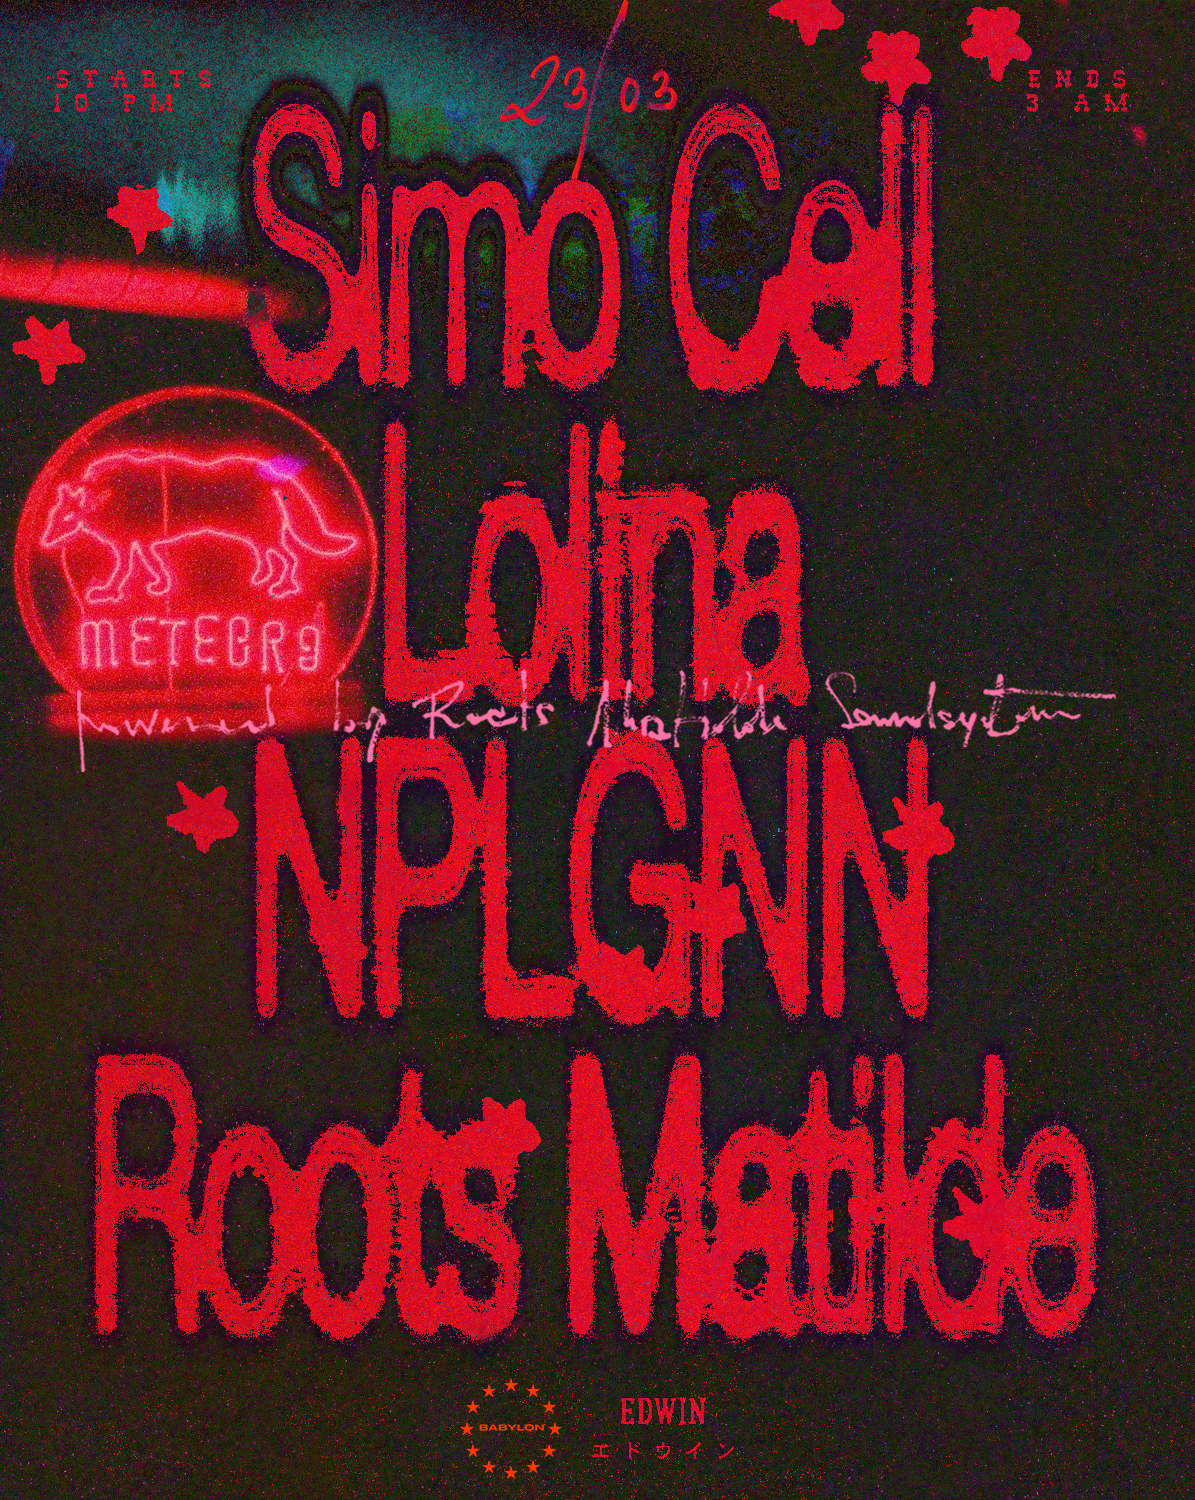 BABYLON 16 w/ Simo Cell • Lolina live • NPLGNN • Roots Matilde - フライヤー表